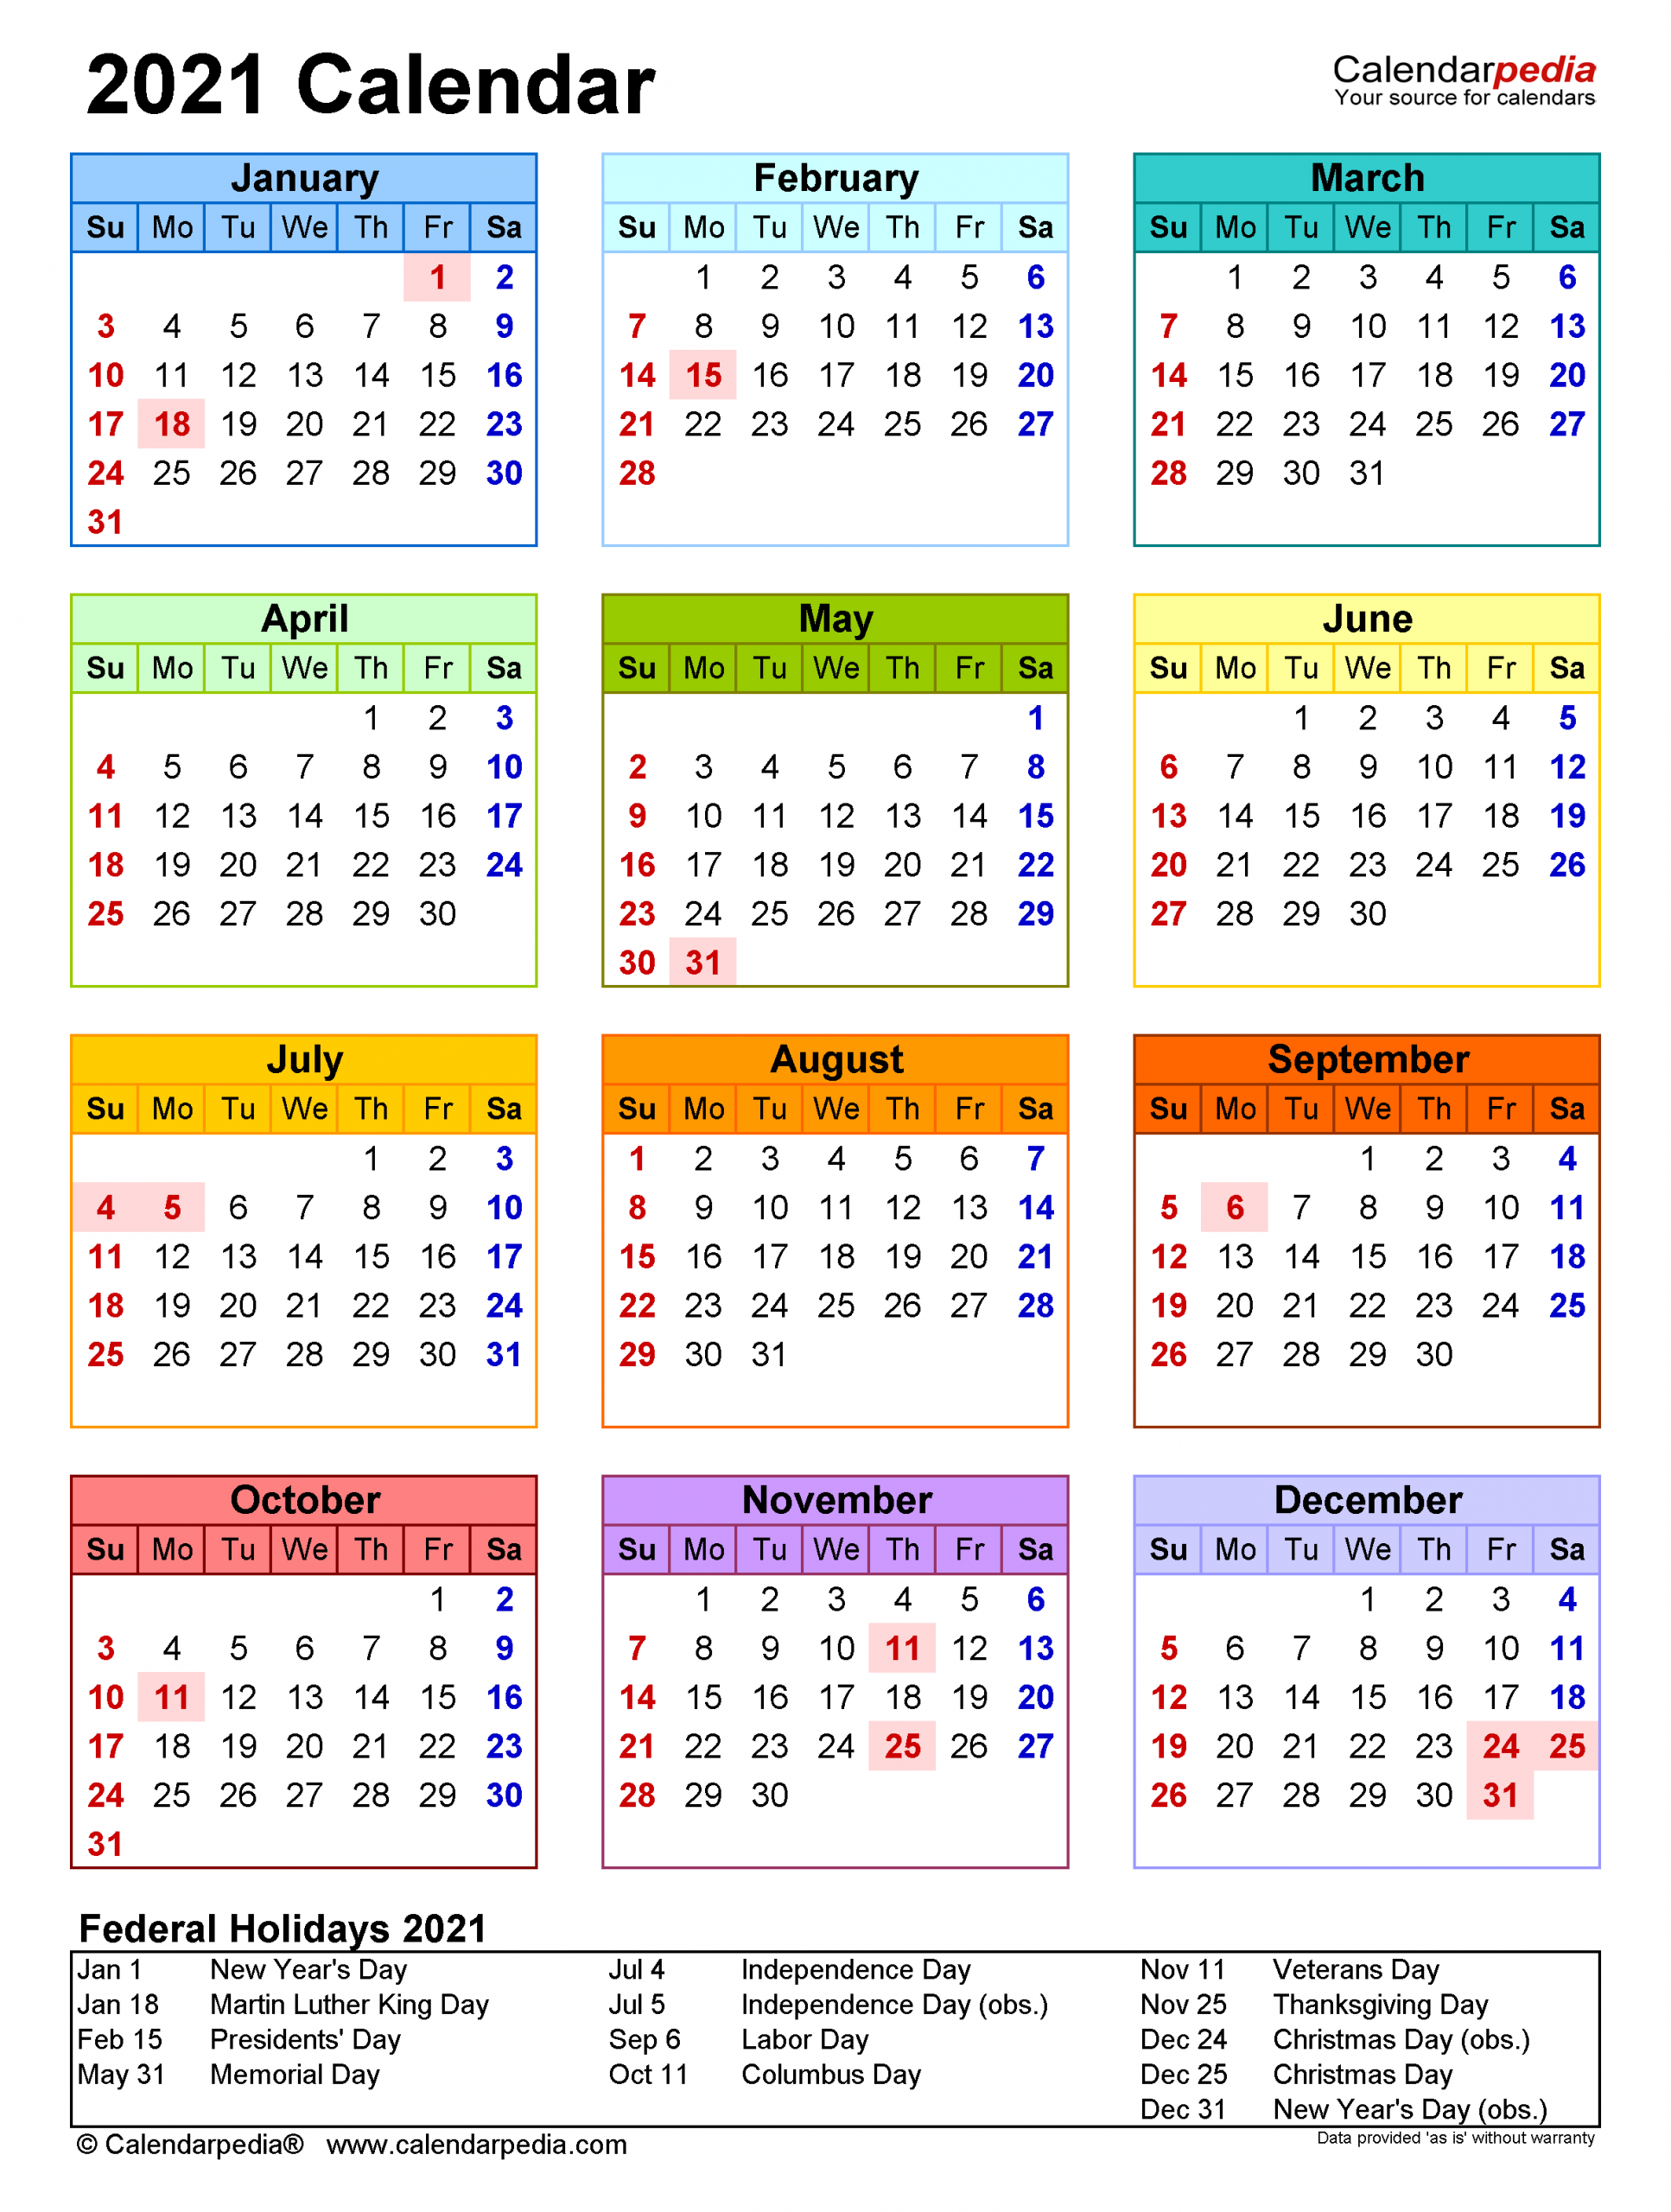 2021 Calendar Holidays And Observances Printable